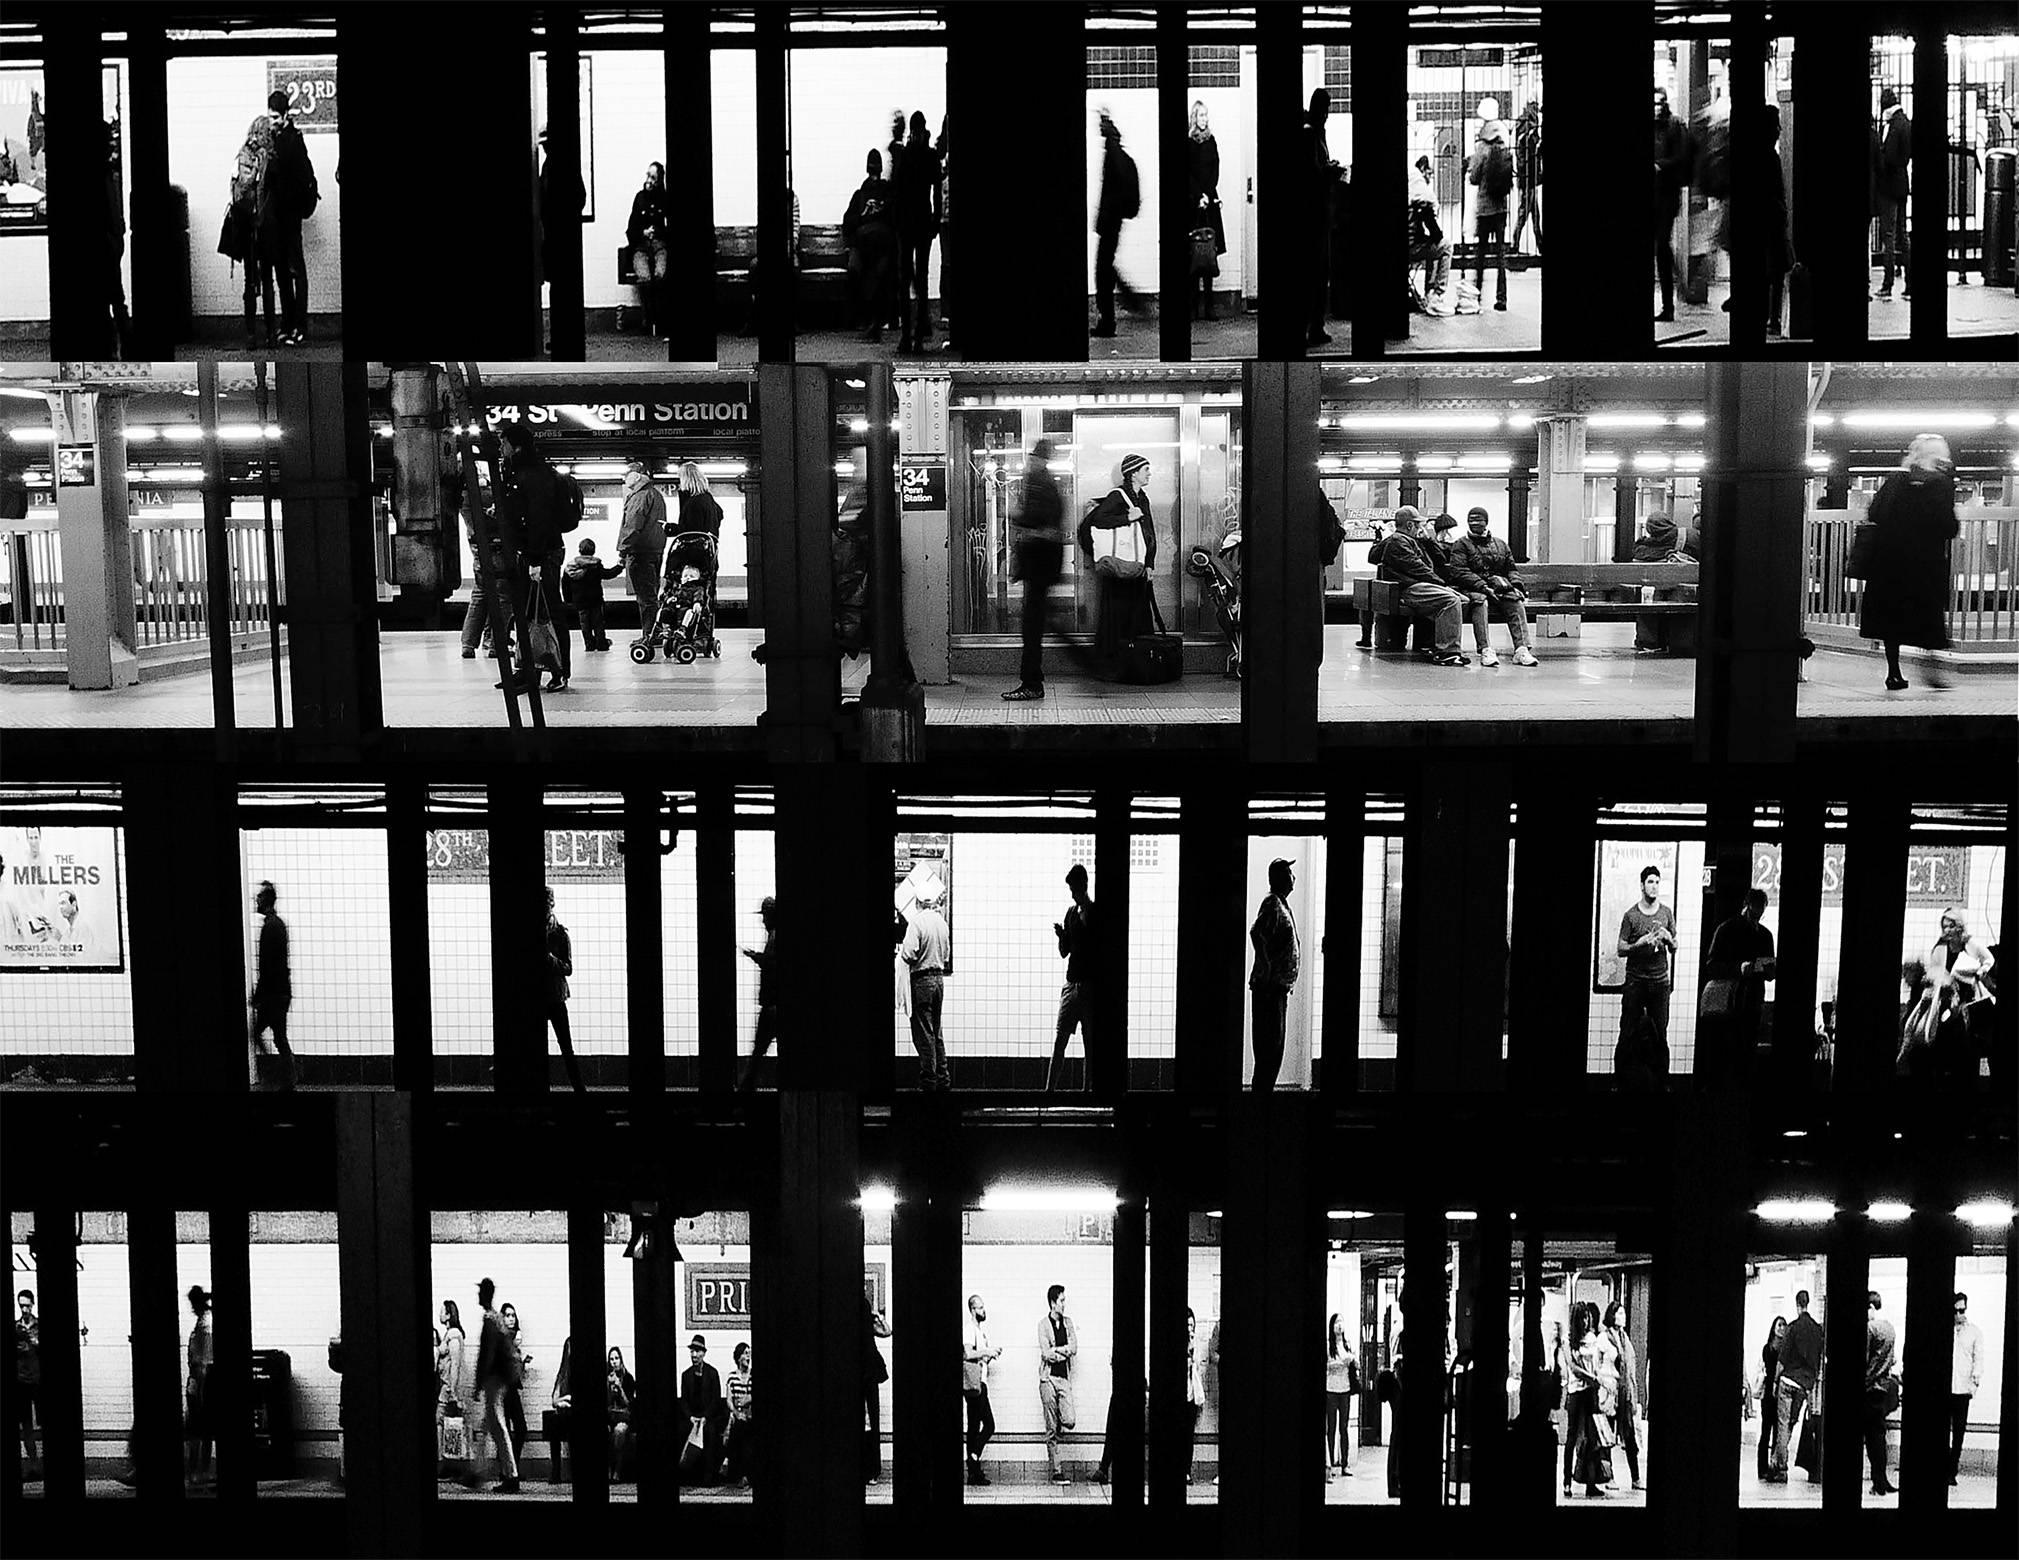 Fernando Natalici Figurative Photograph - NYC Subway Voyeur photograph (NY street photography) 